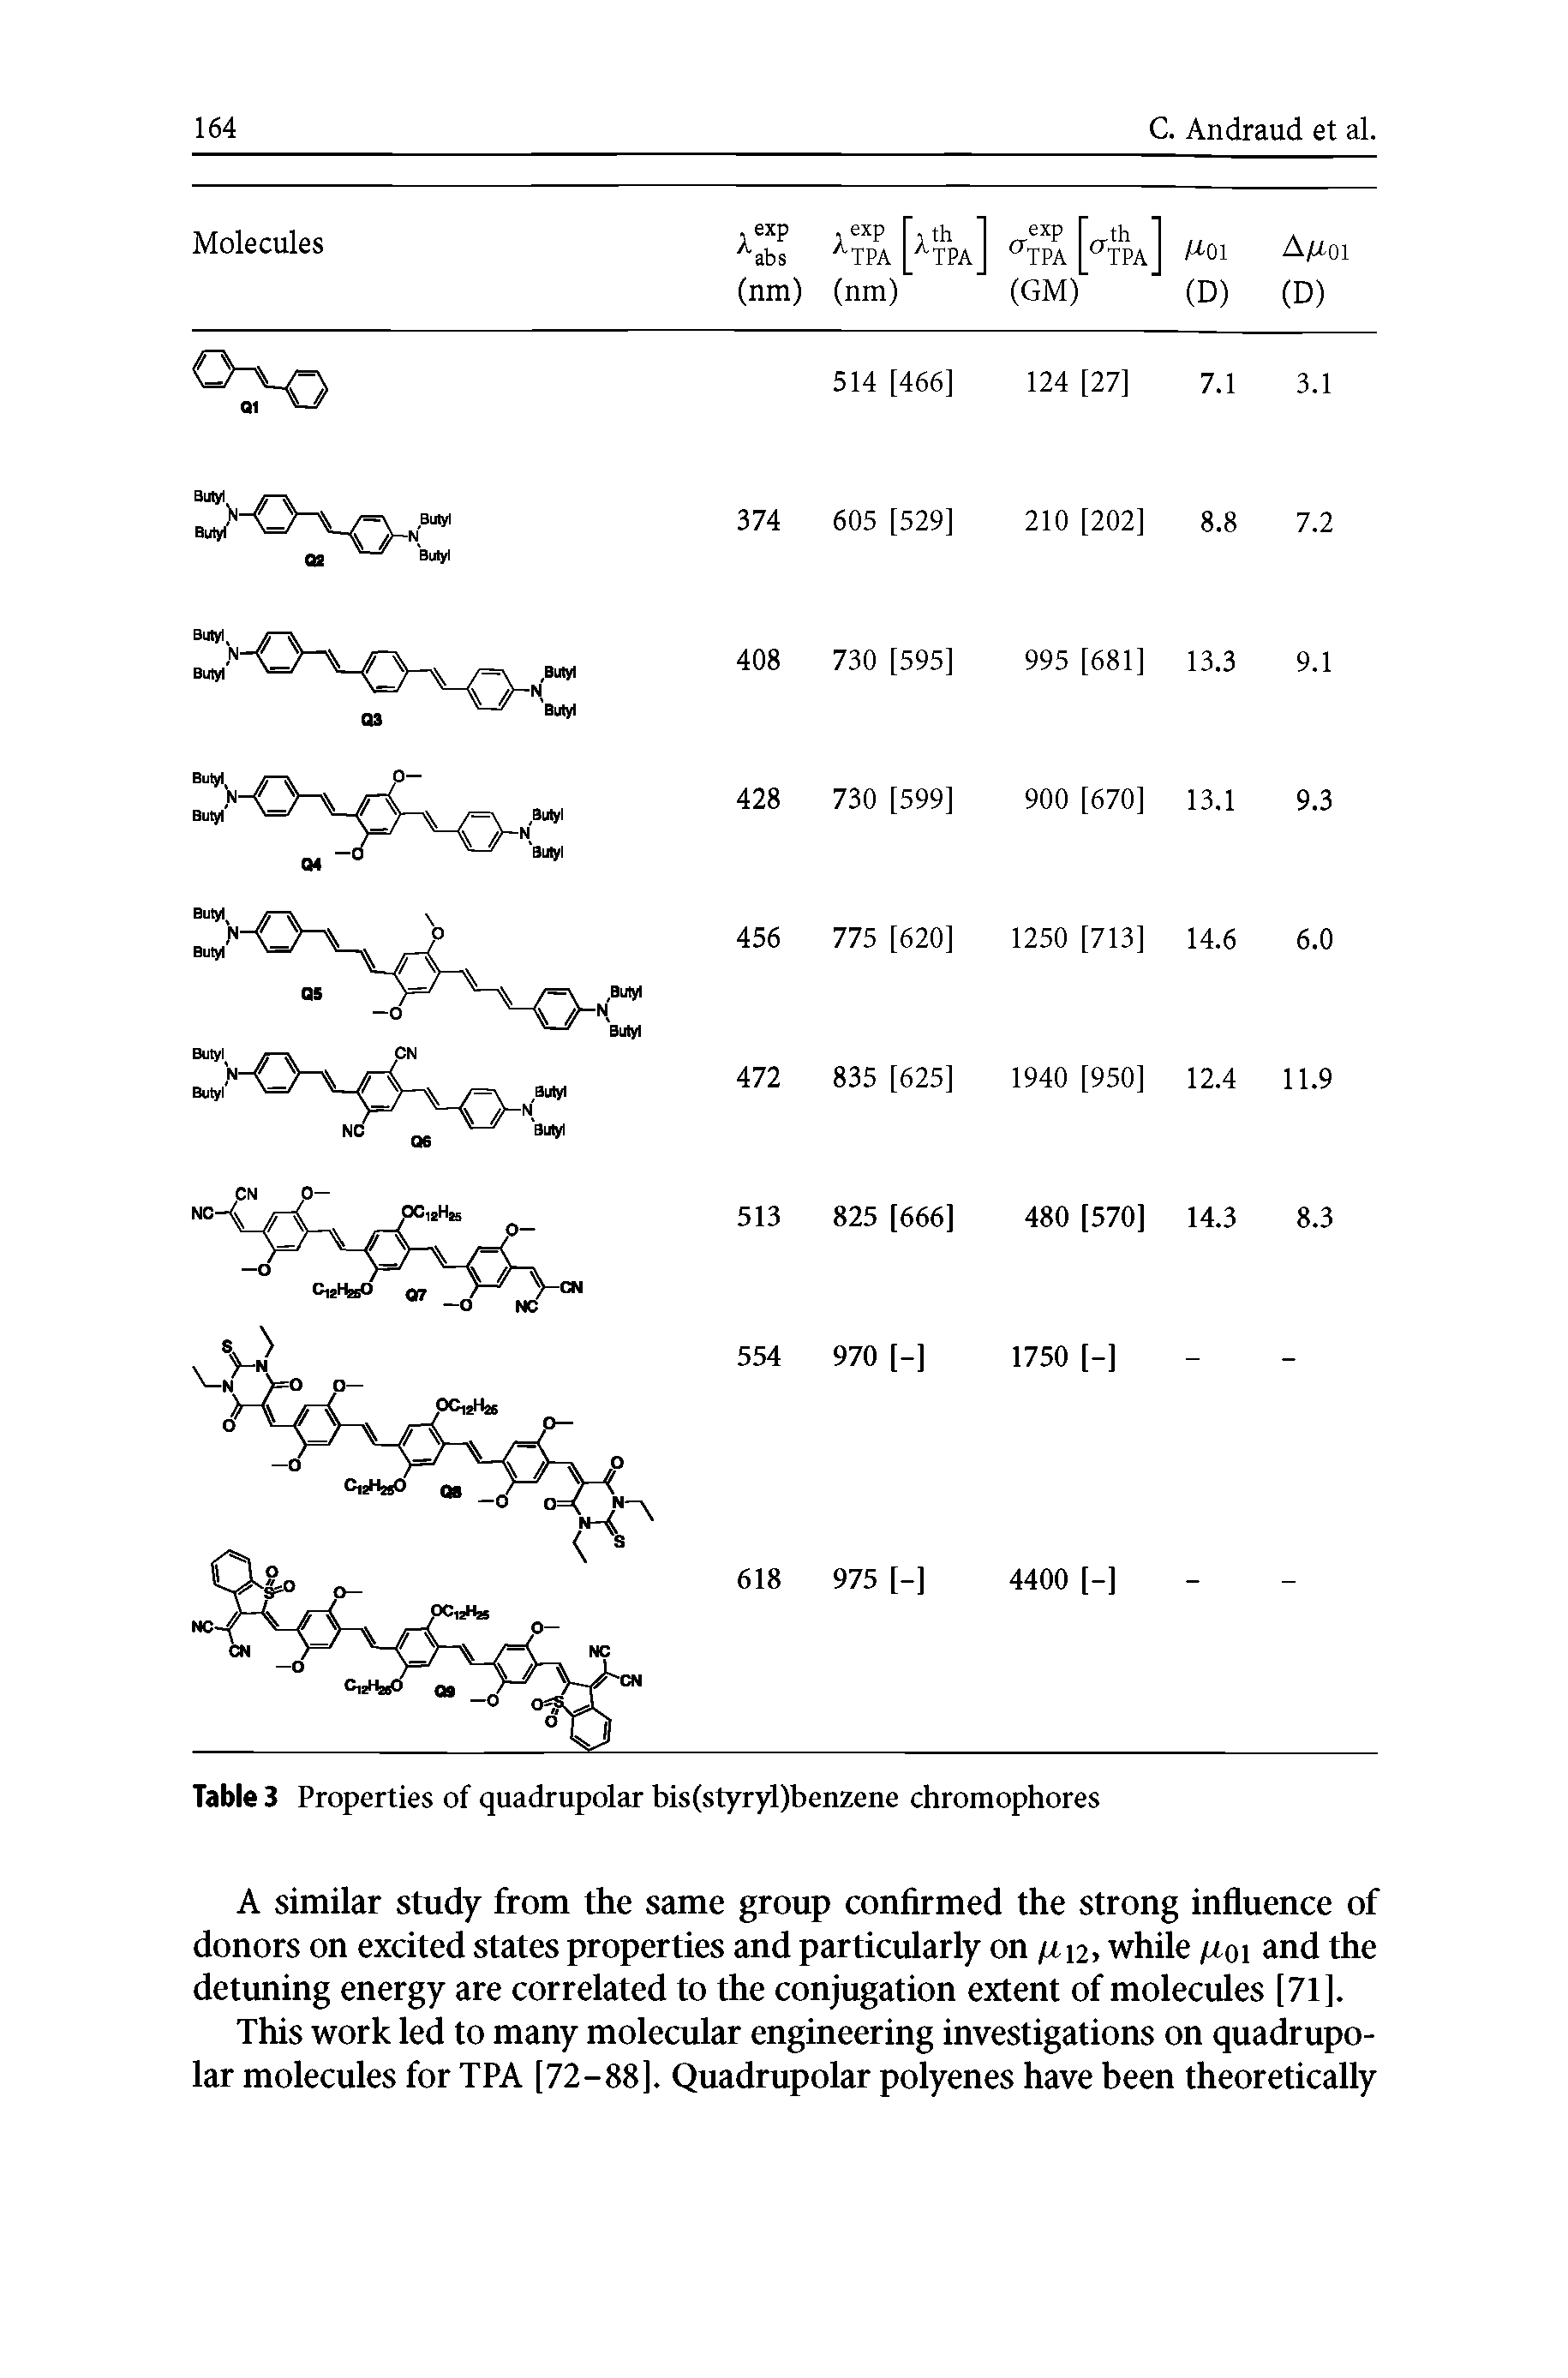 Table 3 Properties of quadrupolar bis(styryl)benzene chromophores...